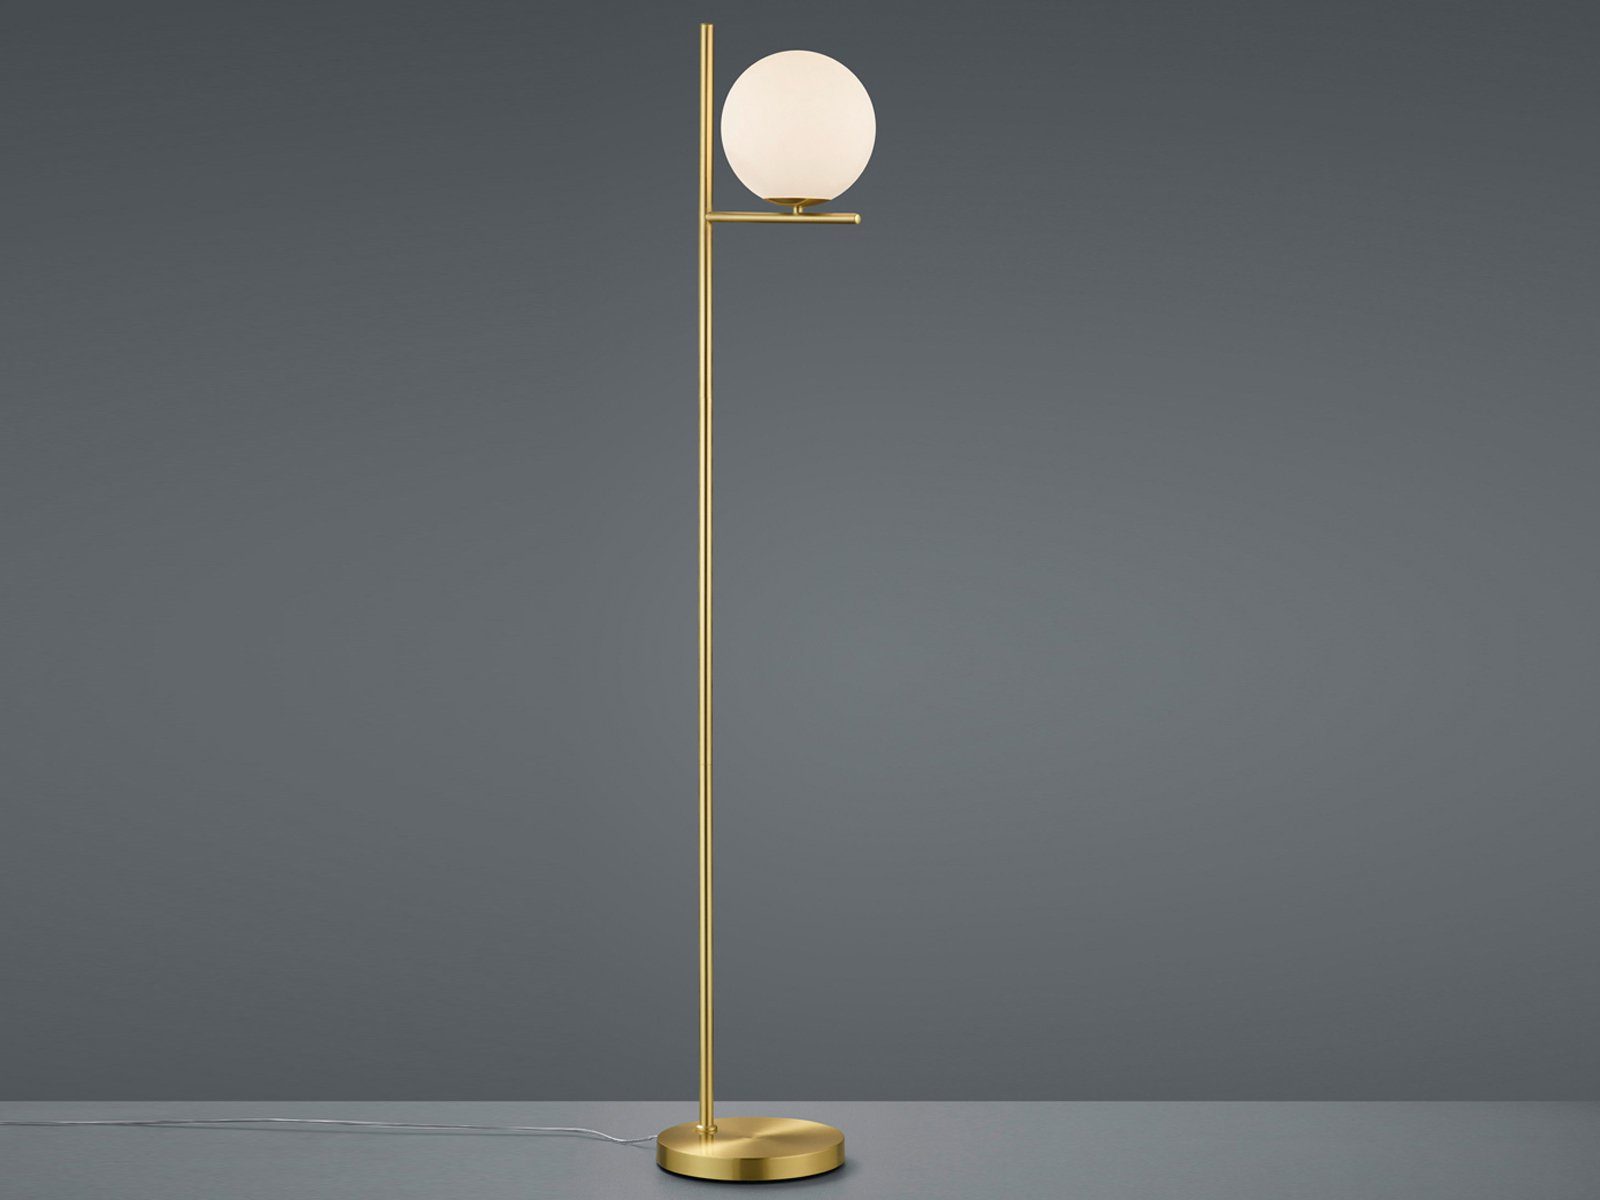 meineWunschleuchte Warmweiß, Weiß LED / Dimmfunktion, dimmbar-e Lampenschirm LED matt H: 150cm mit moderne Stehlampe, gold-en, Messing Glas-Kugel wechselbar,